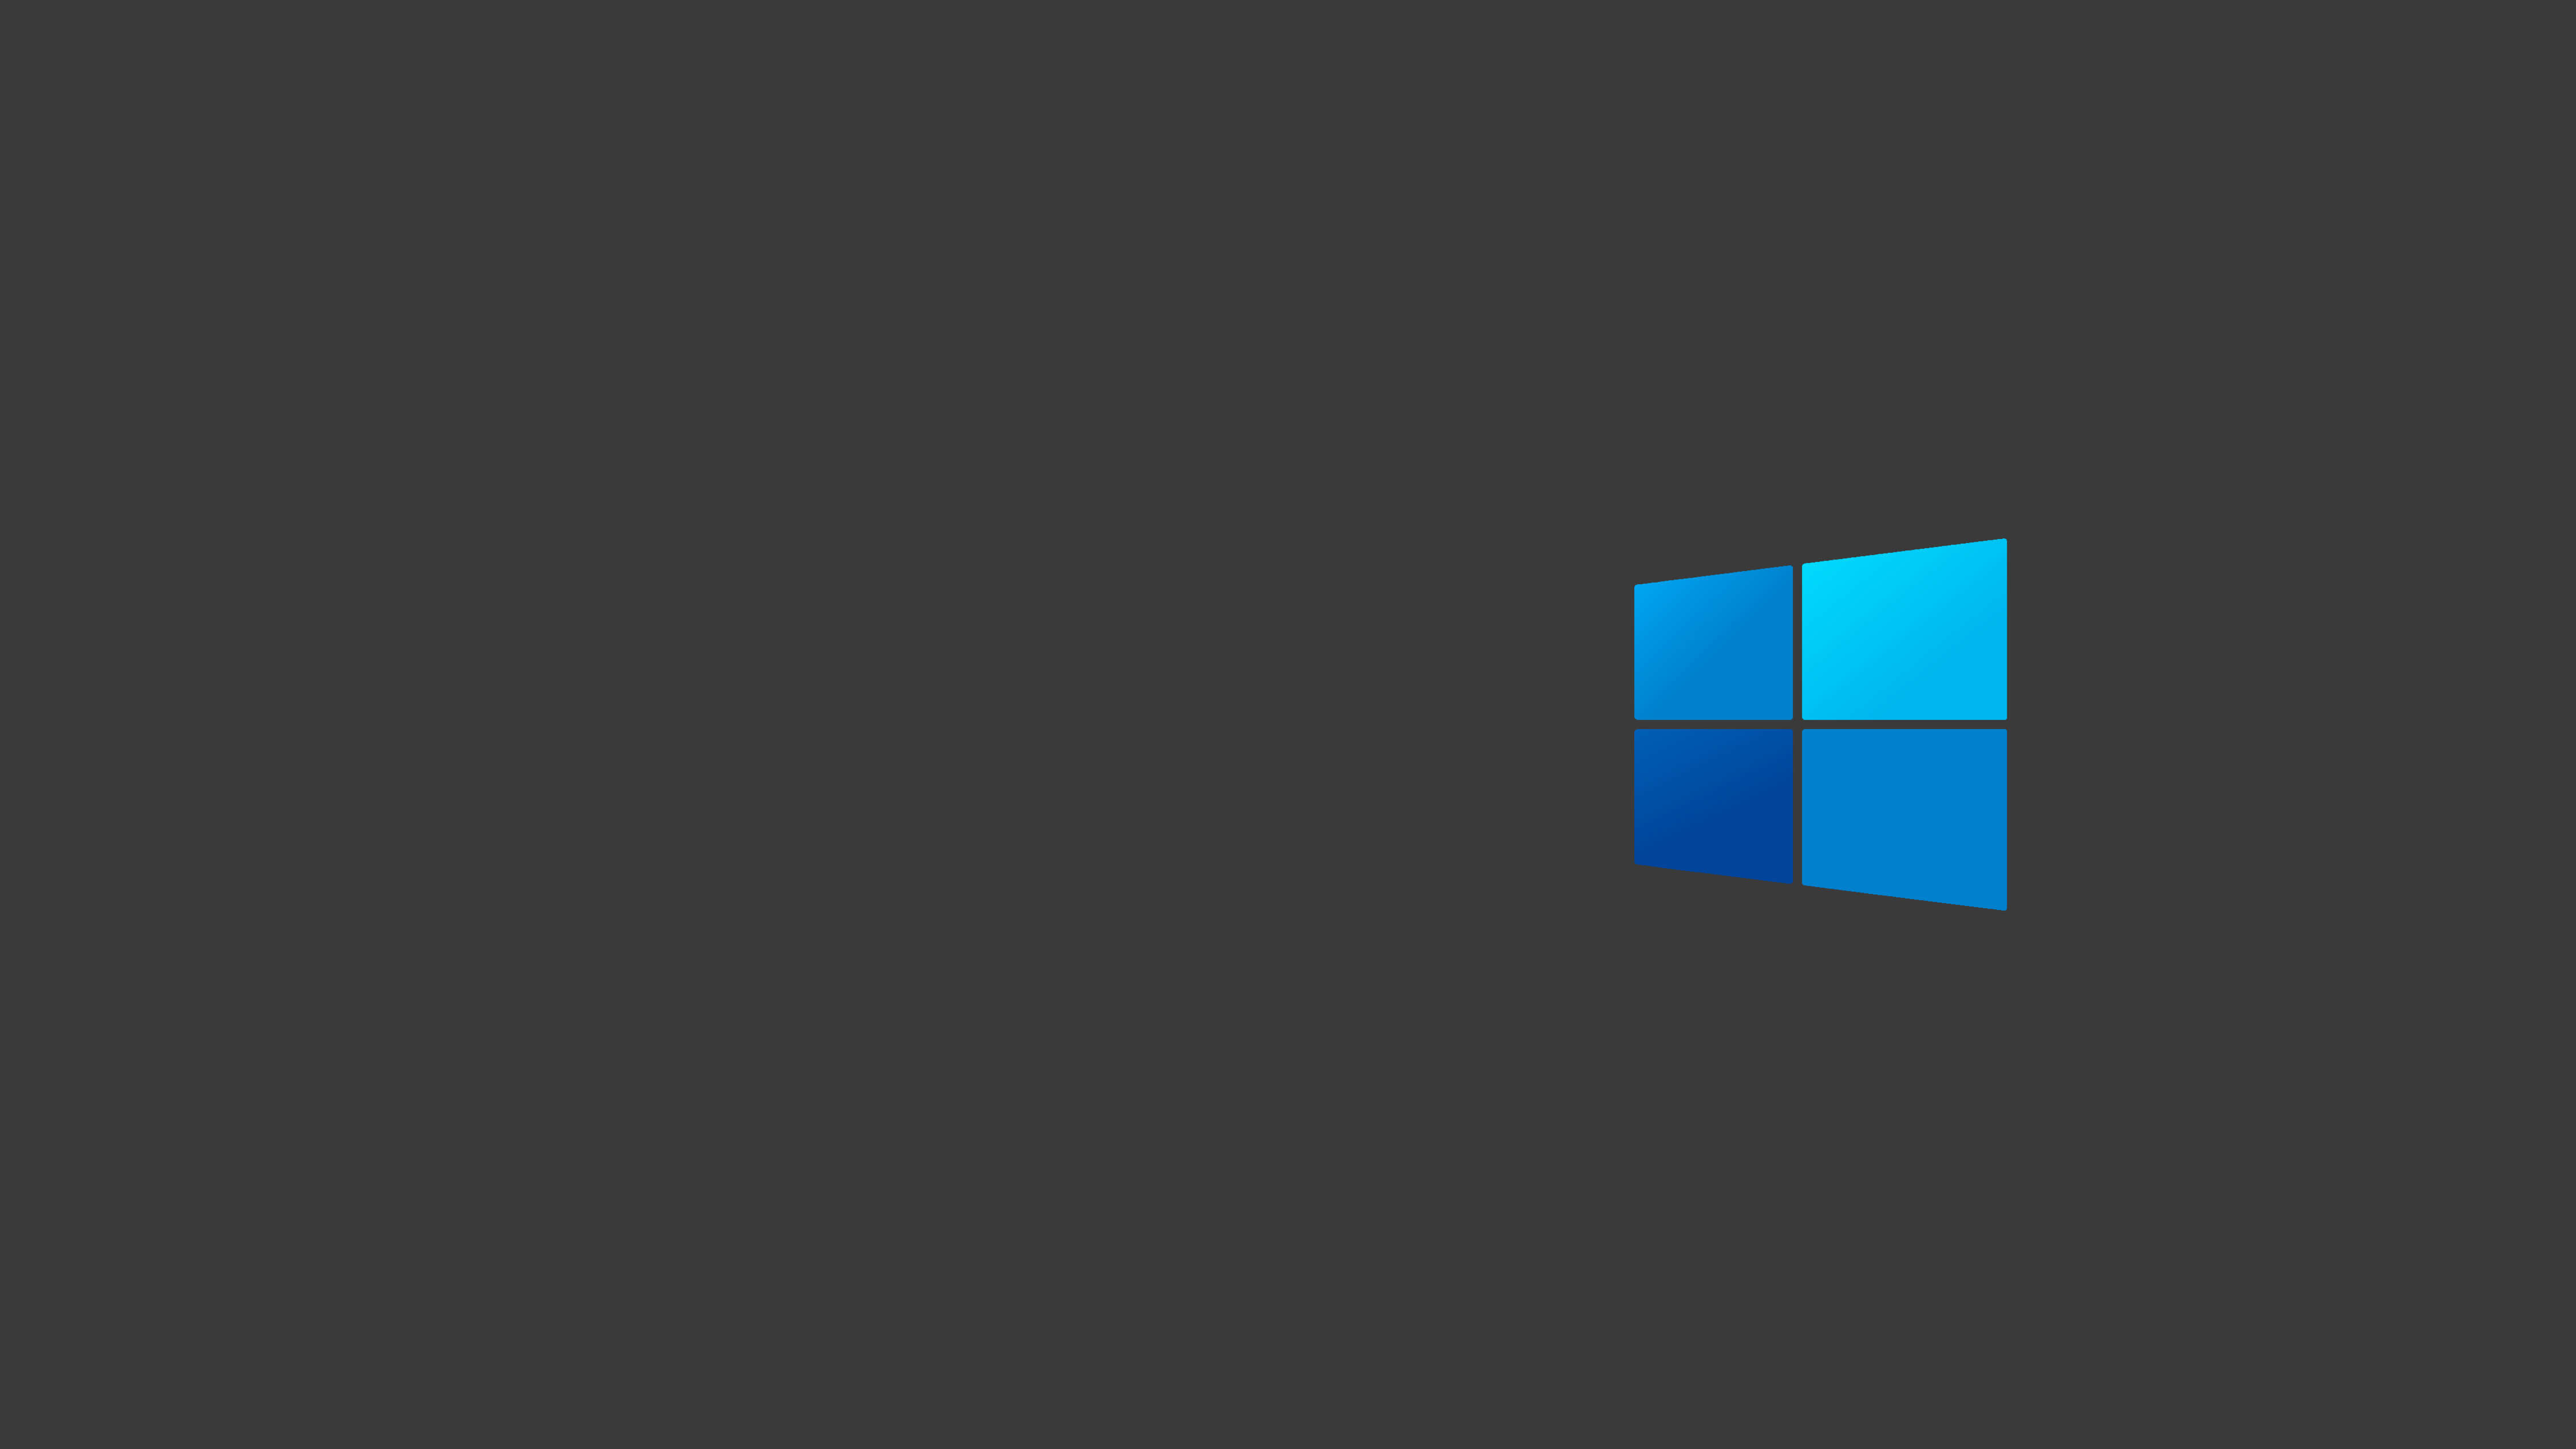 7680x4320 Windows 10 Dark Logo Minimal 8K Wallpaper, HD Minimalist 4K  Wallpapers, Images, Photos and Background - Wallpapers Den